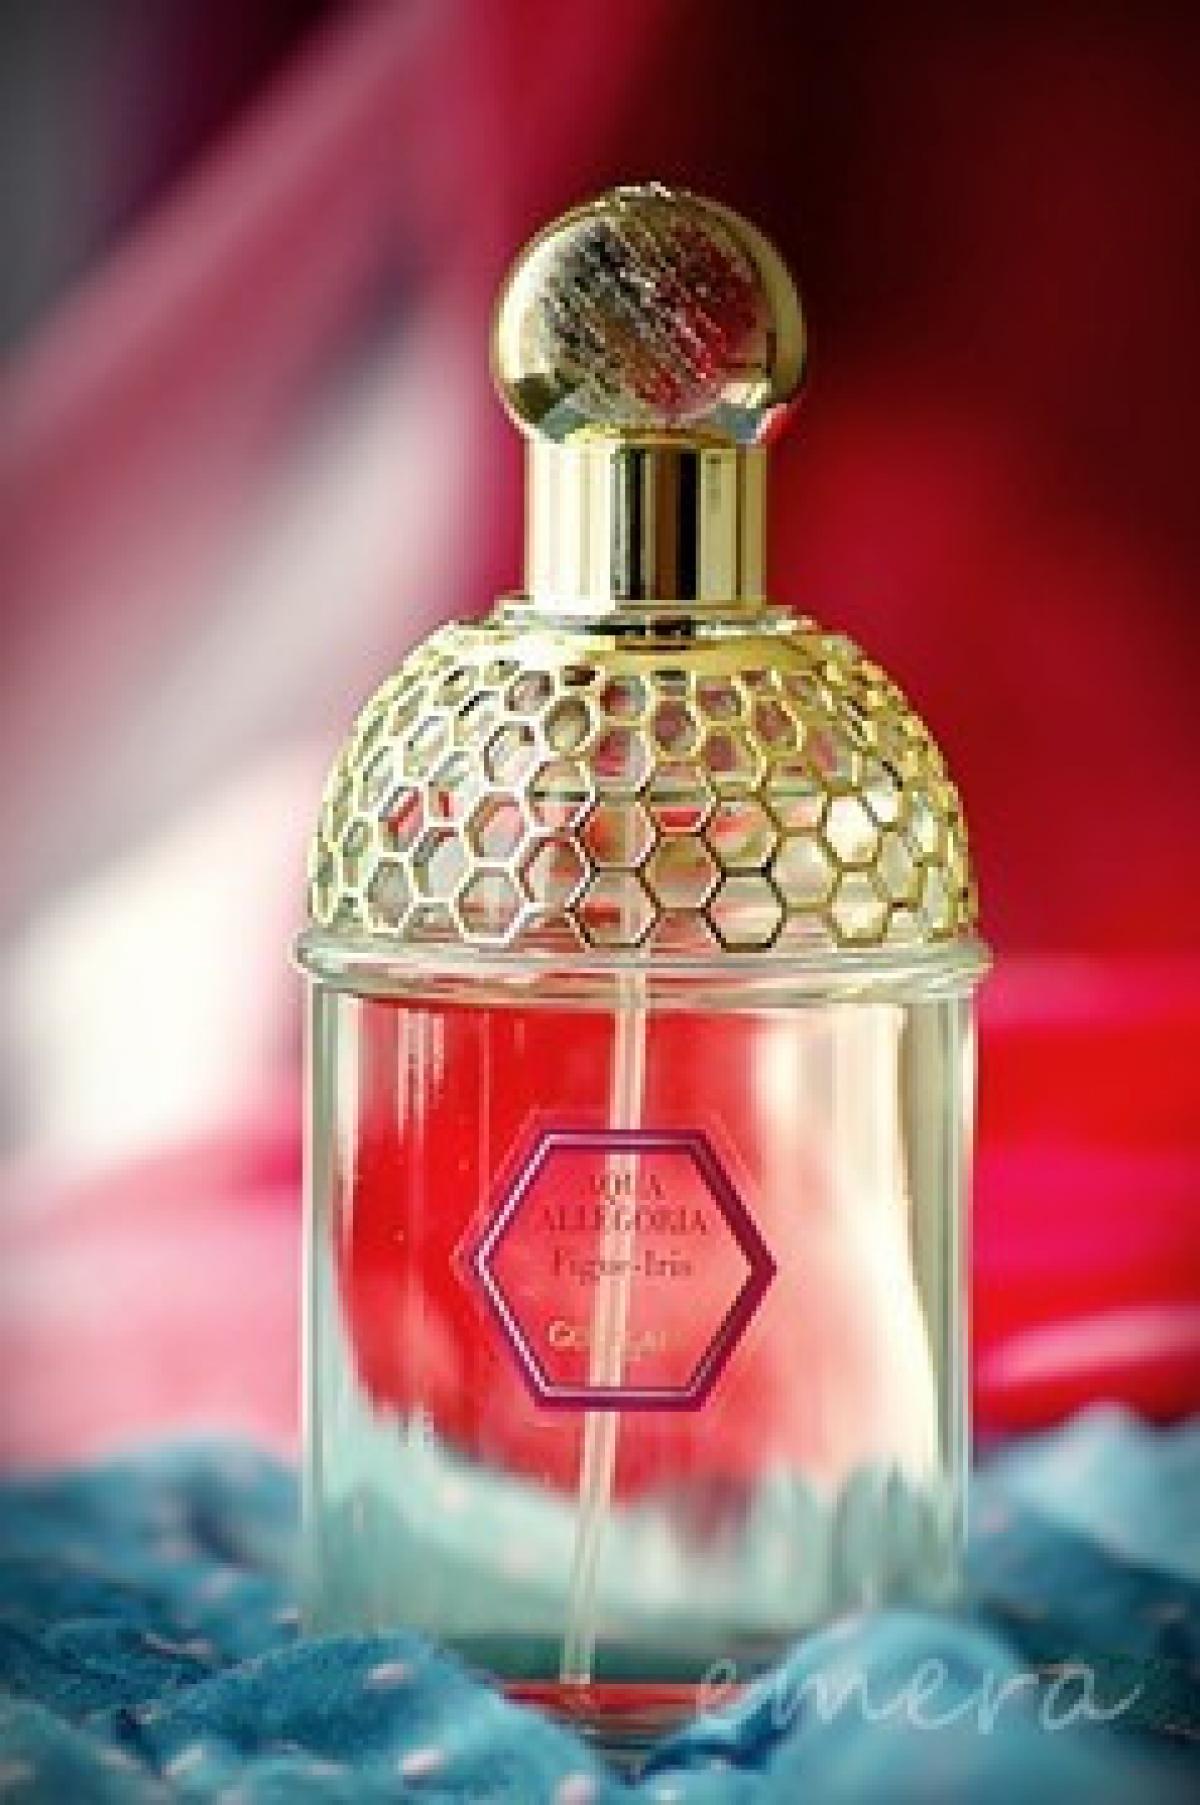 Aqua Allegoria Figue-Iris Guerlain perfume - a fragrance for women 2008